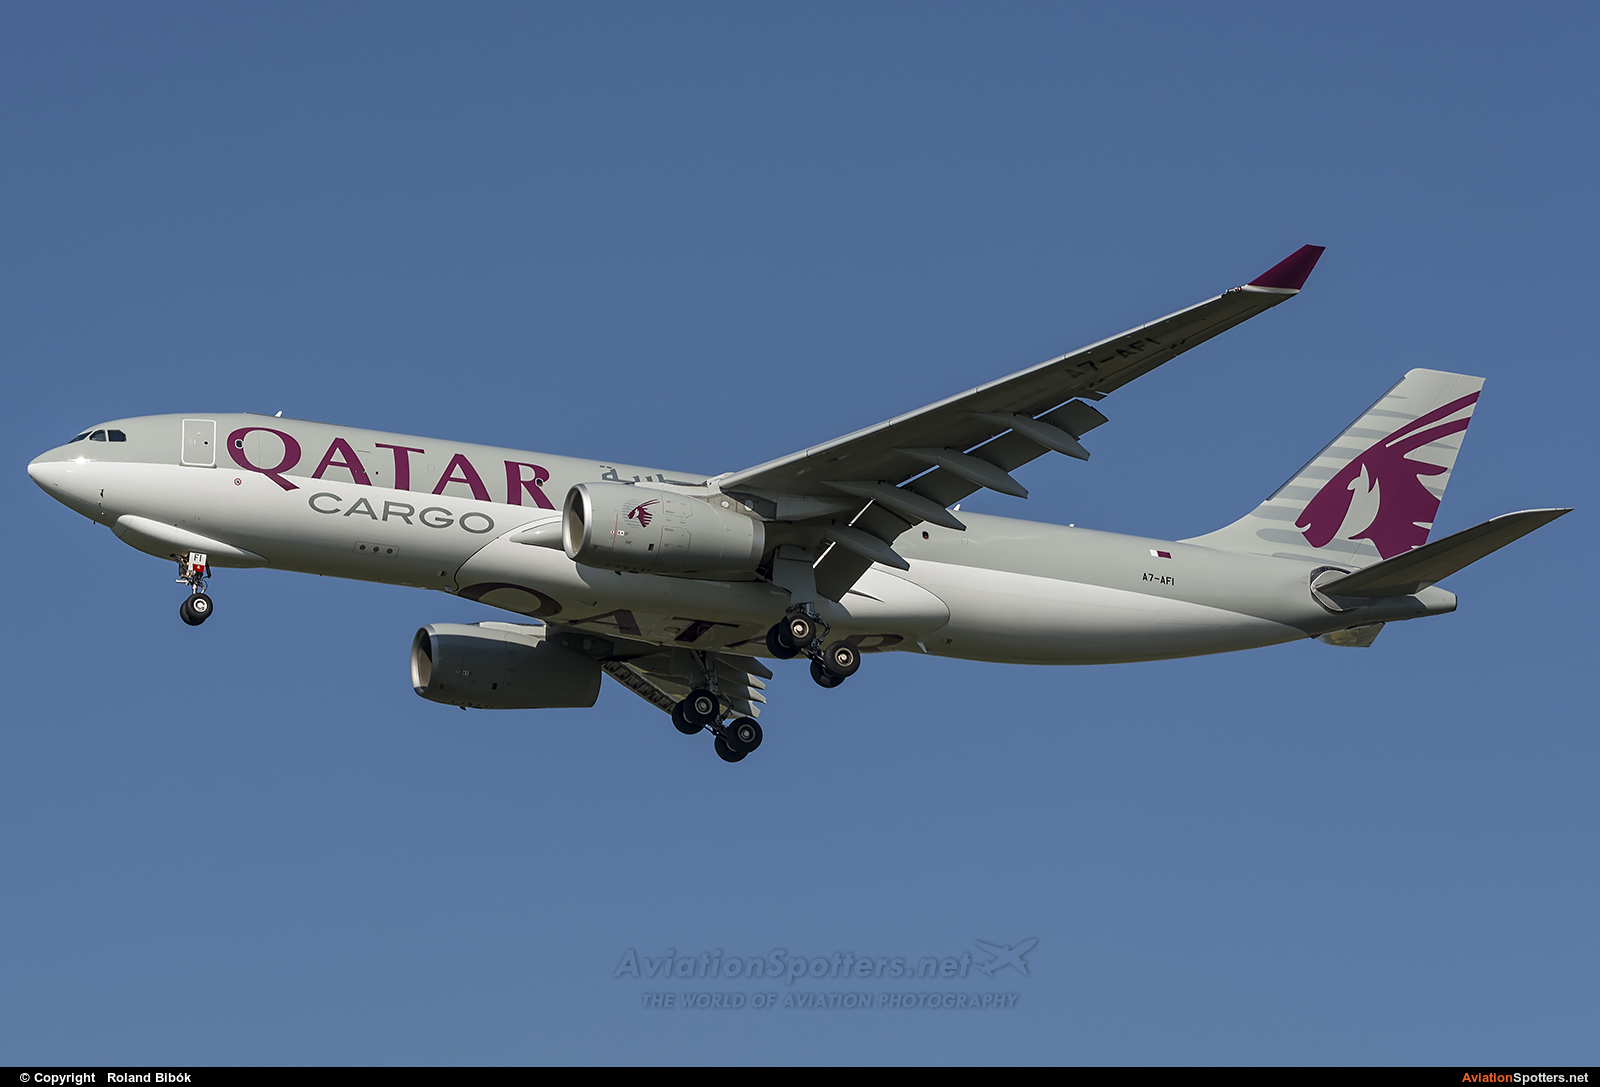 Qatar Airways Cargo  -  A330-243  (A7-AFI) By Roland Bibók (Roland Bibok)